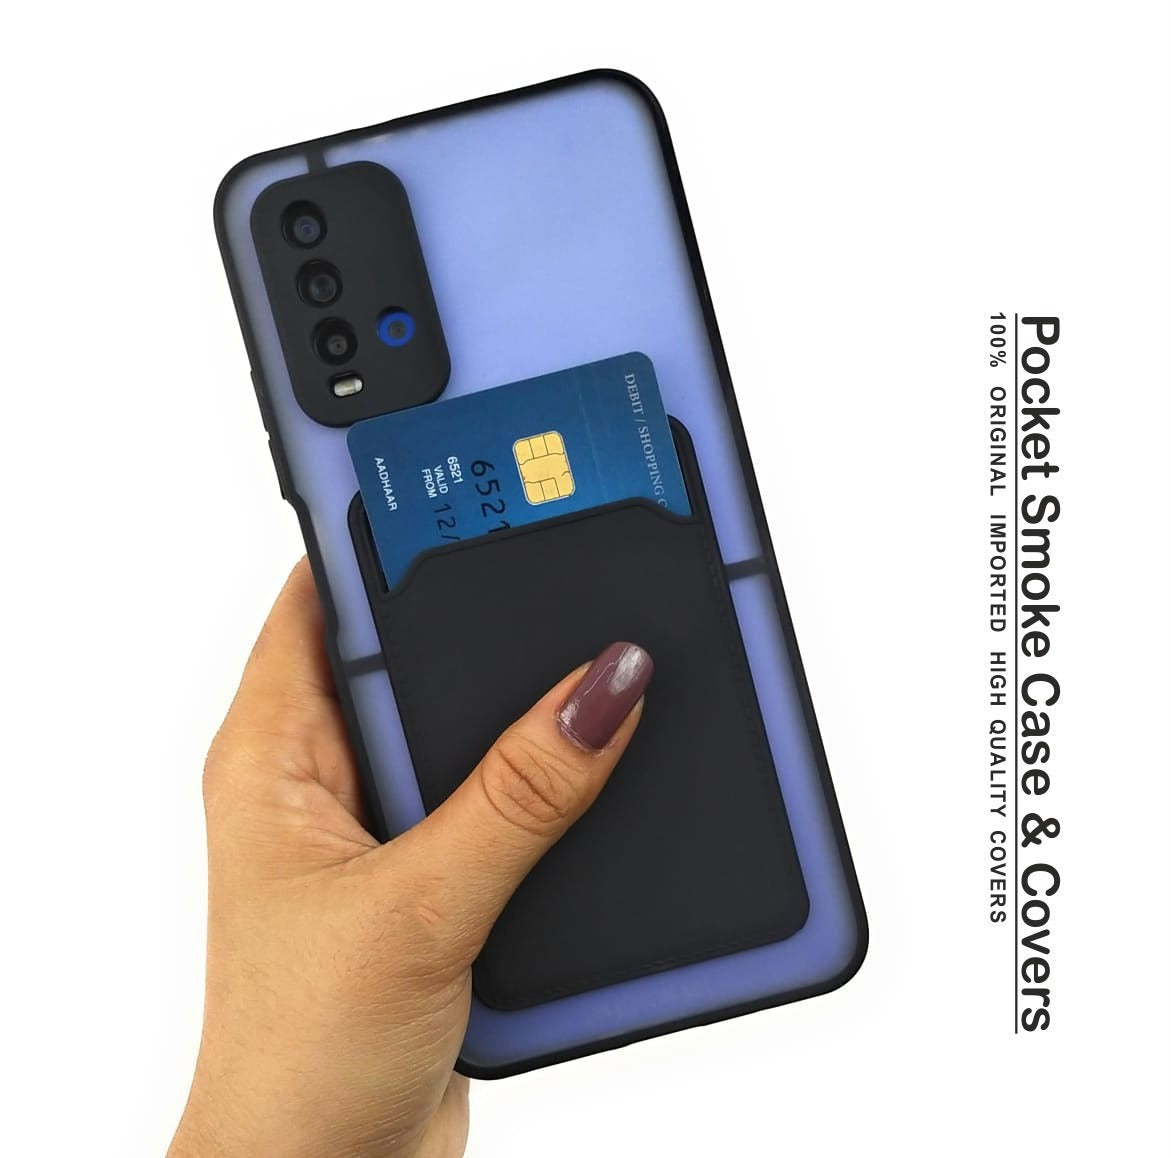 23701 Vivo's Card Holder Pocket Camera Protection Smoke Back Cover | Back Cover With Pocket | Man & Woman Cover/case | Dual Protection Case |  Unique Case